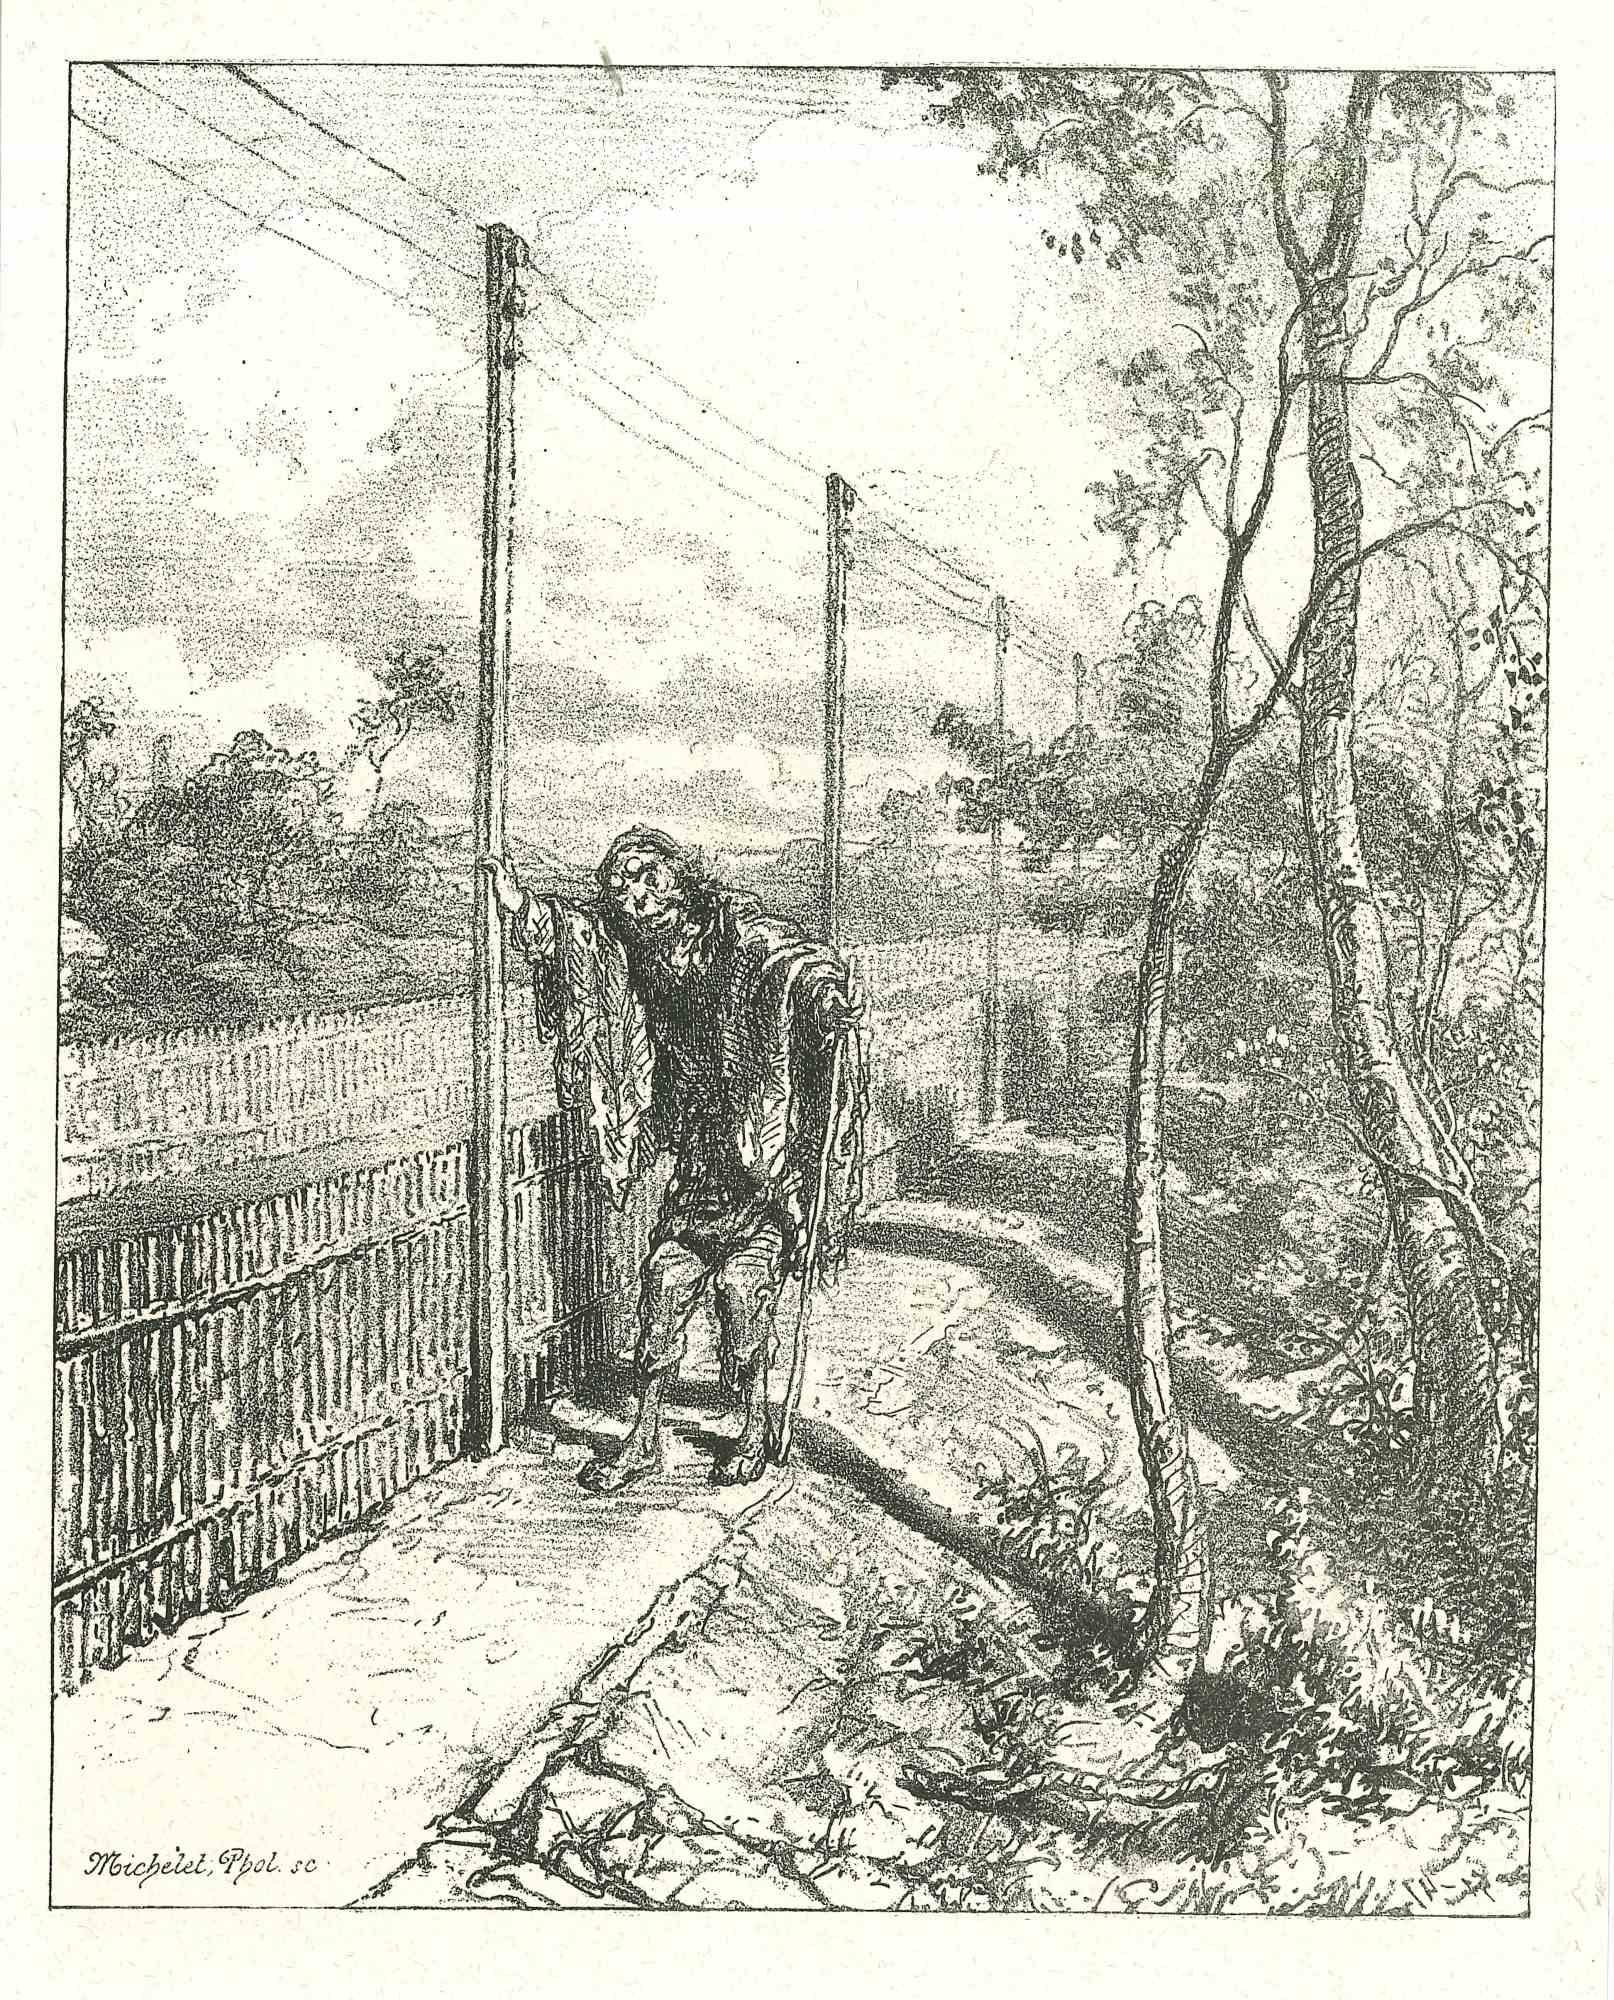 The Misery - Original Lithograph by Paul Gavarni - 1881